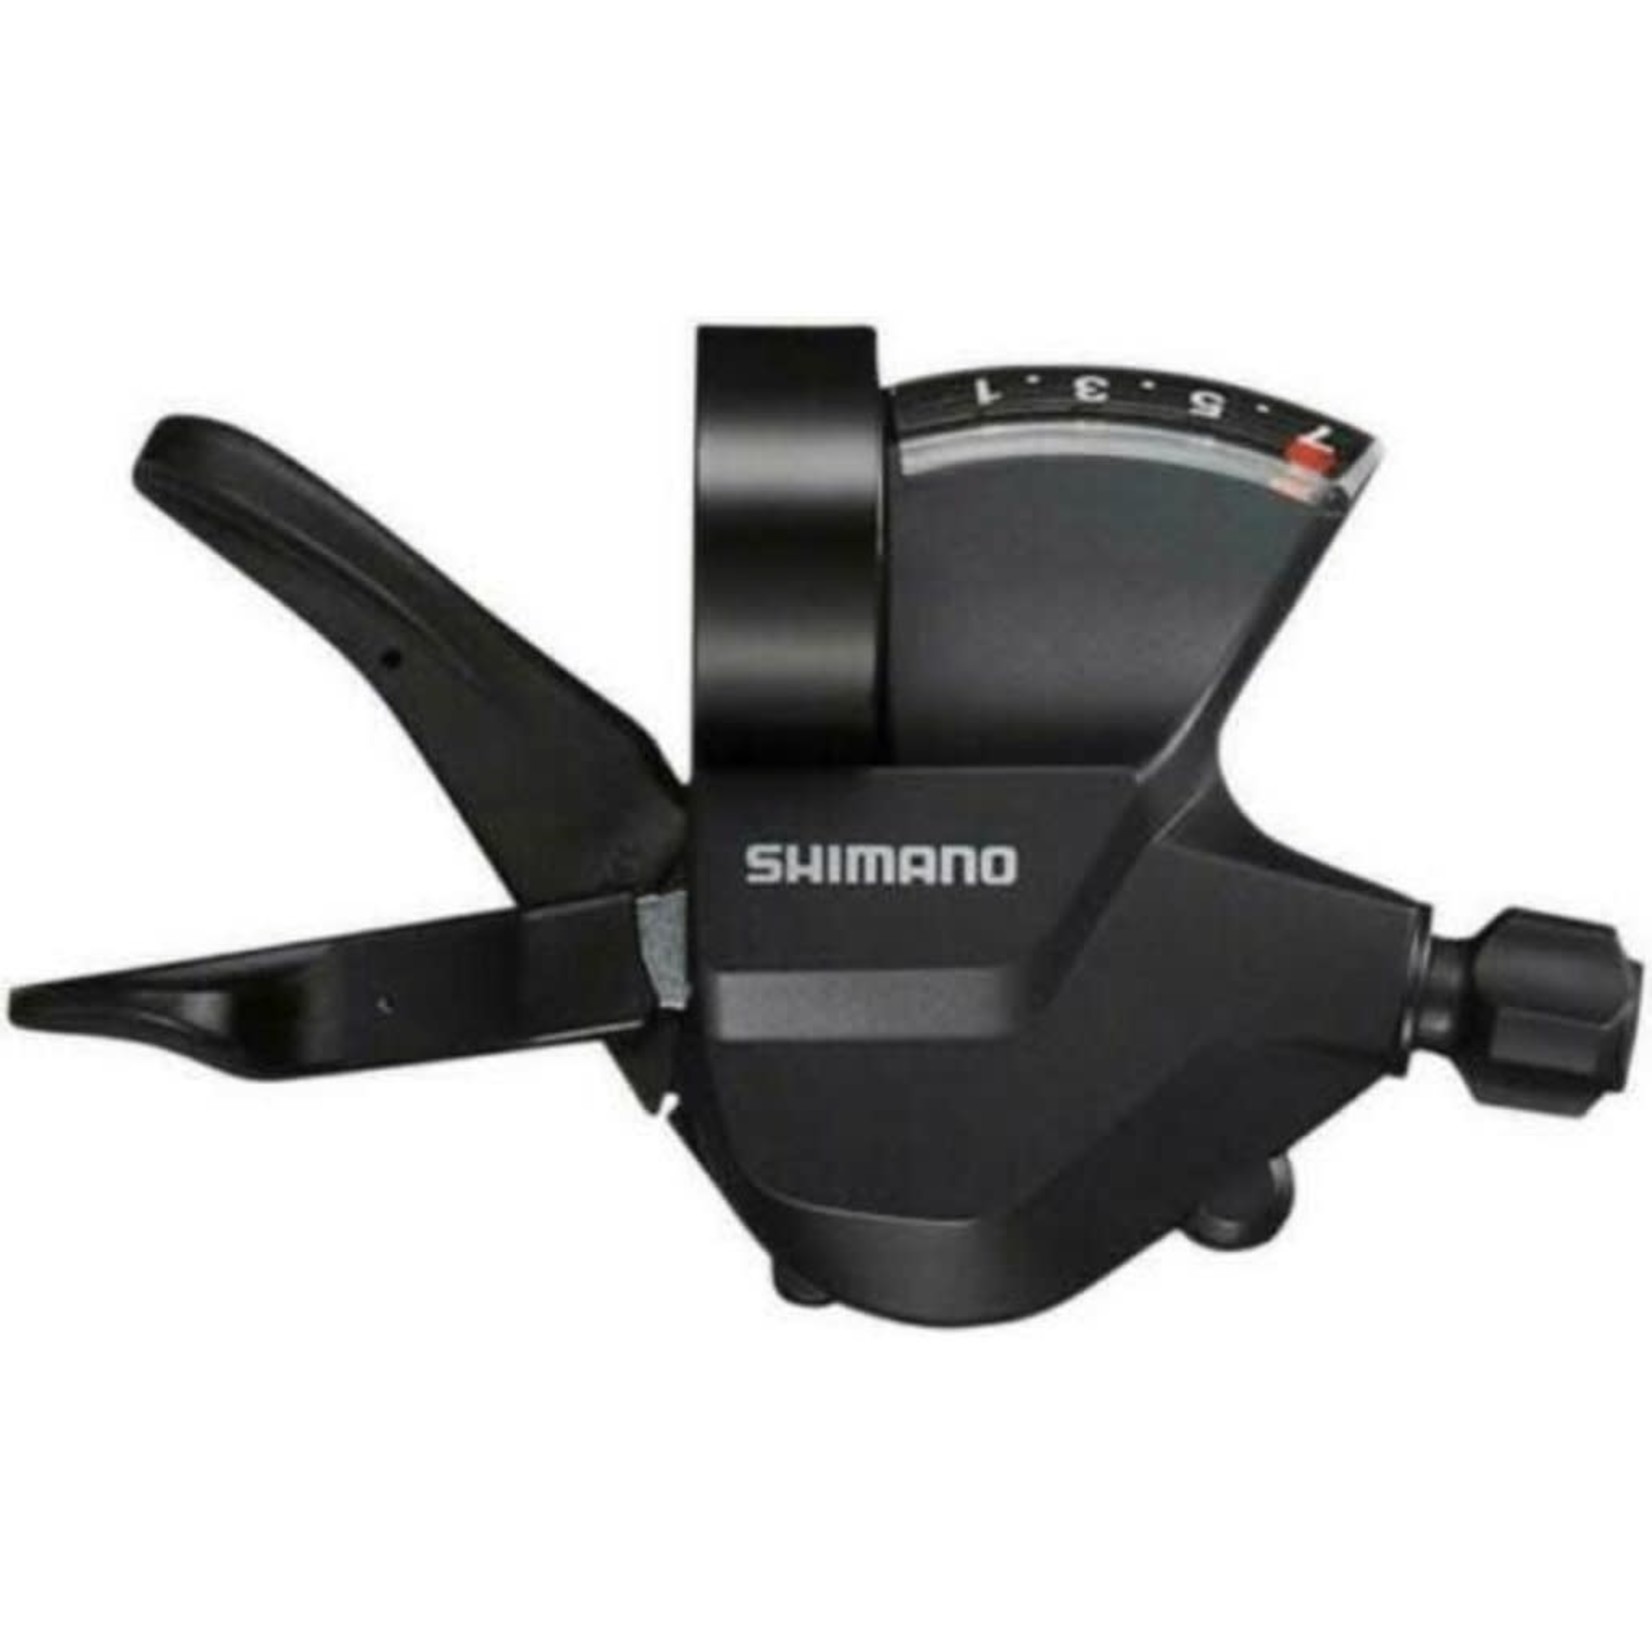 Shimano Shimano, SL-M315-7R, Trigger Shifter, Speed: 7, Black